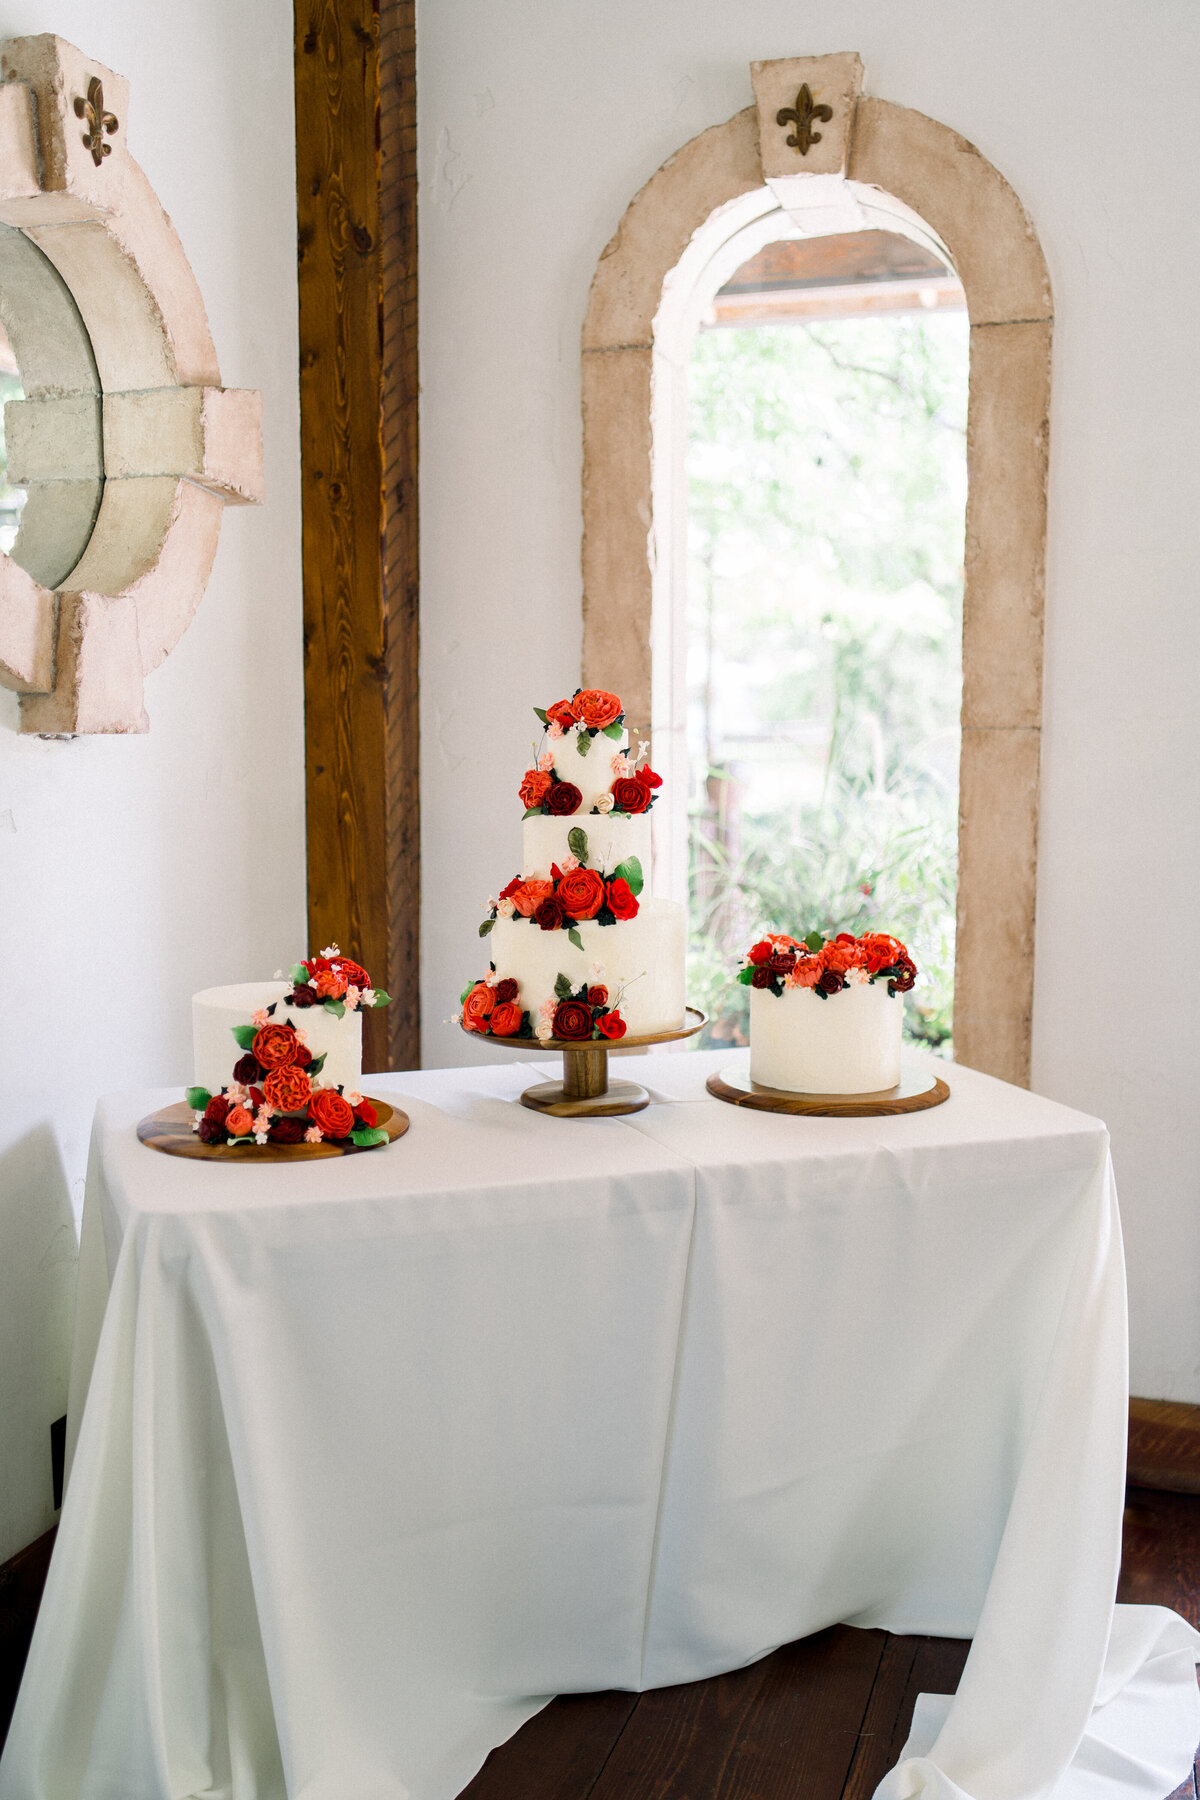 Wedding cake with red flowers at Vizcaya Sacramento, CA